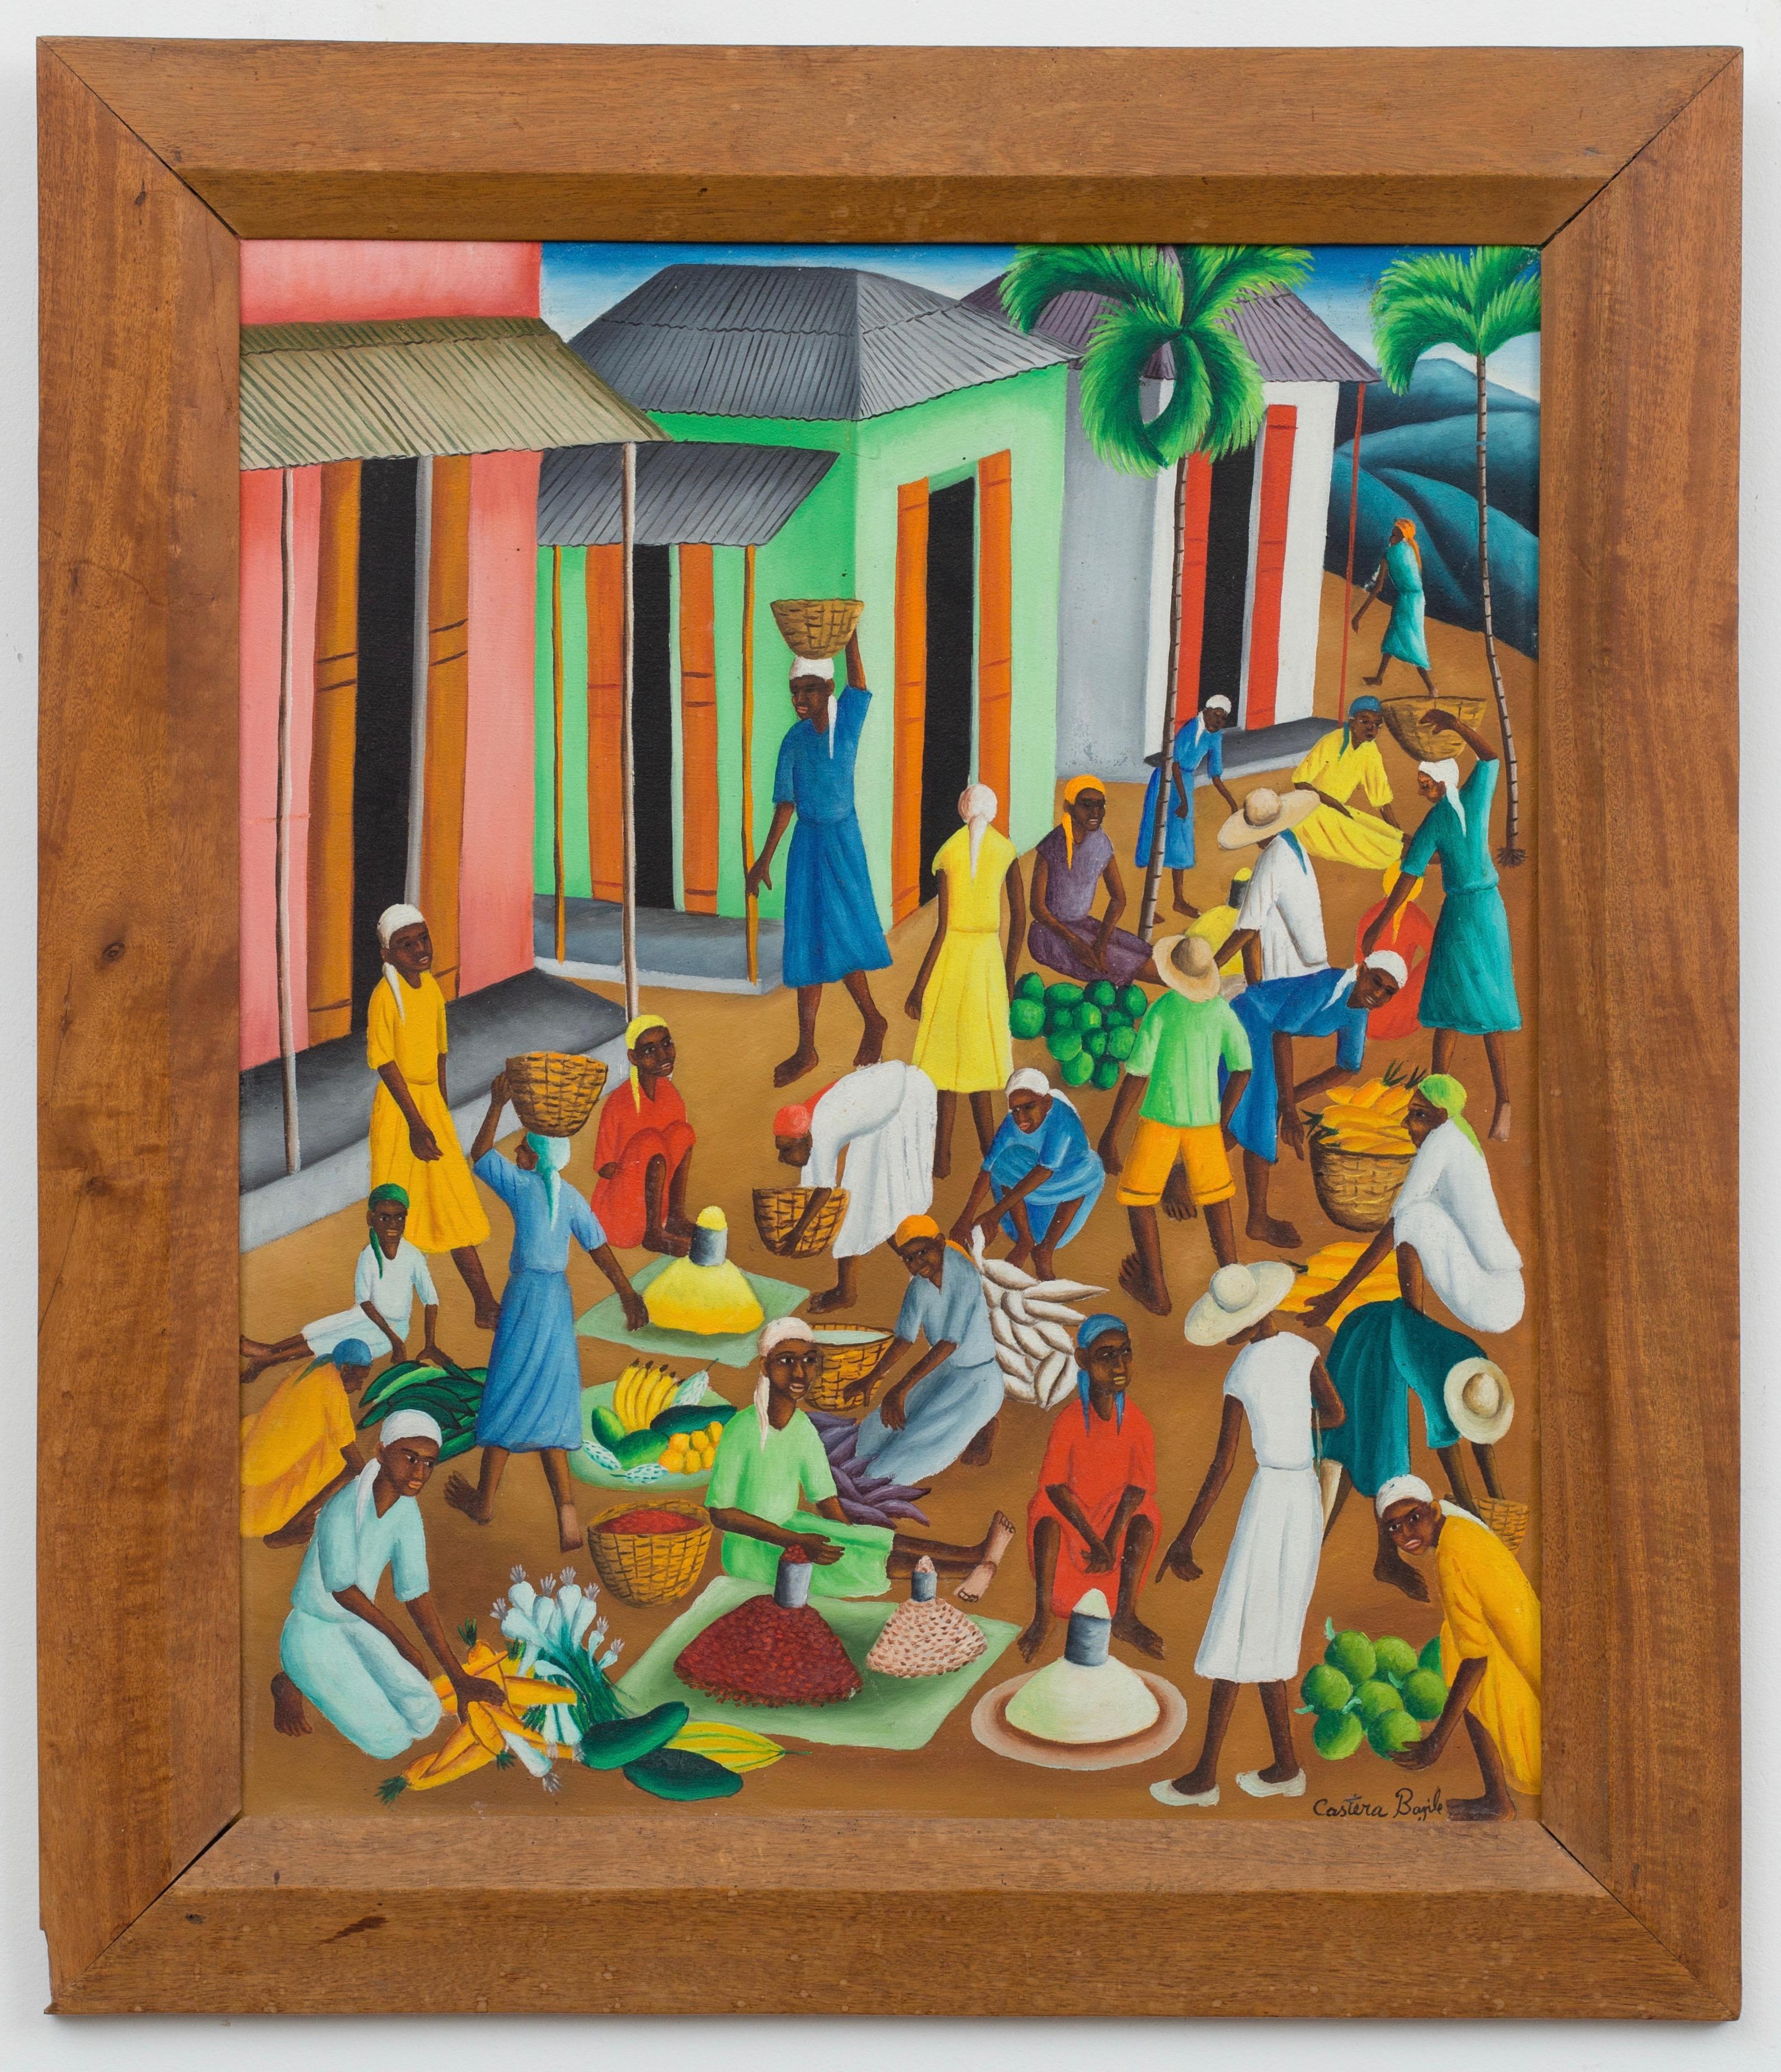 Untitled (Open Air Haitian Market) Haitian Art, Haiti - Painting by Castera Bazile